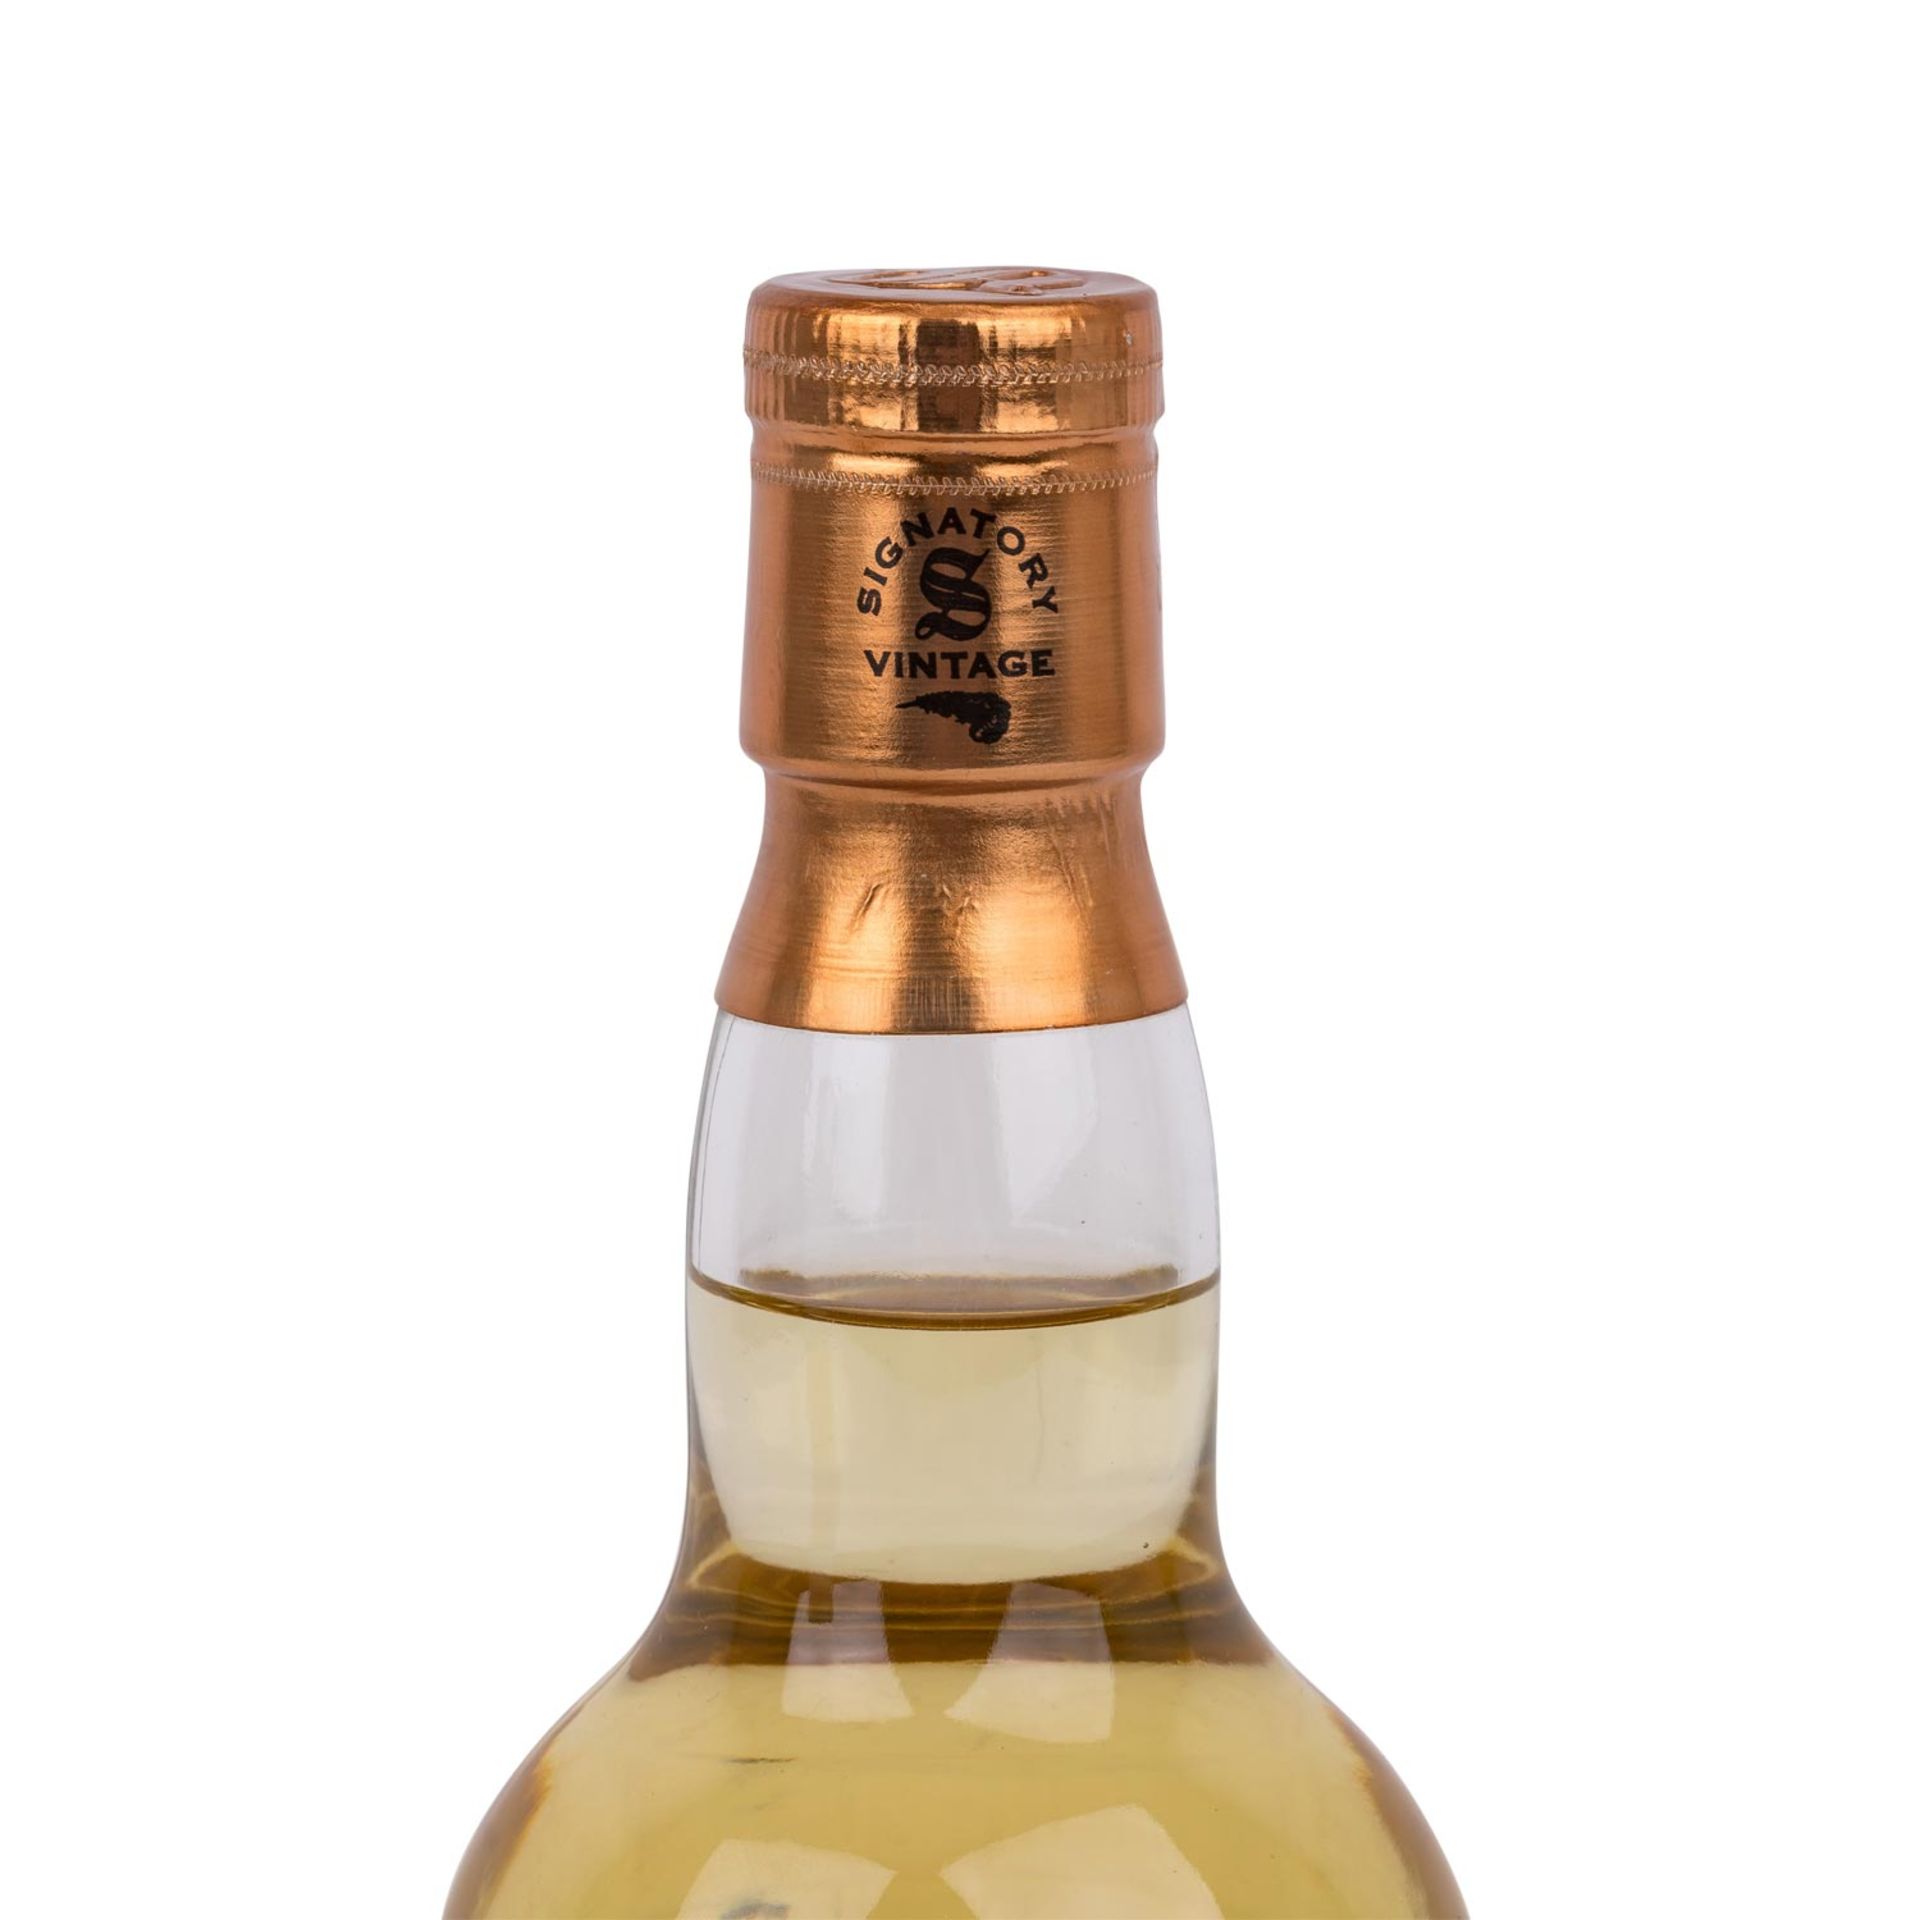 LOWLAND Sigantory Vintage Single Malt Scotch Whisky, Rosebank Distillery 1991 - Bild 2 aus 3